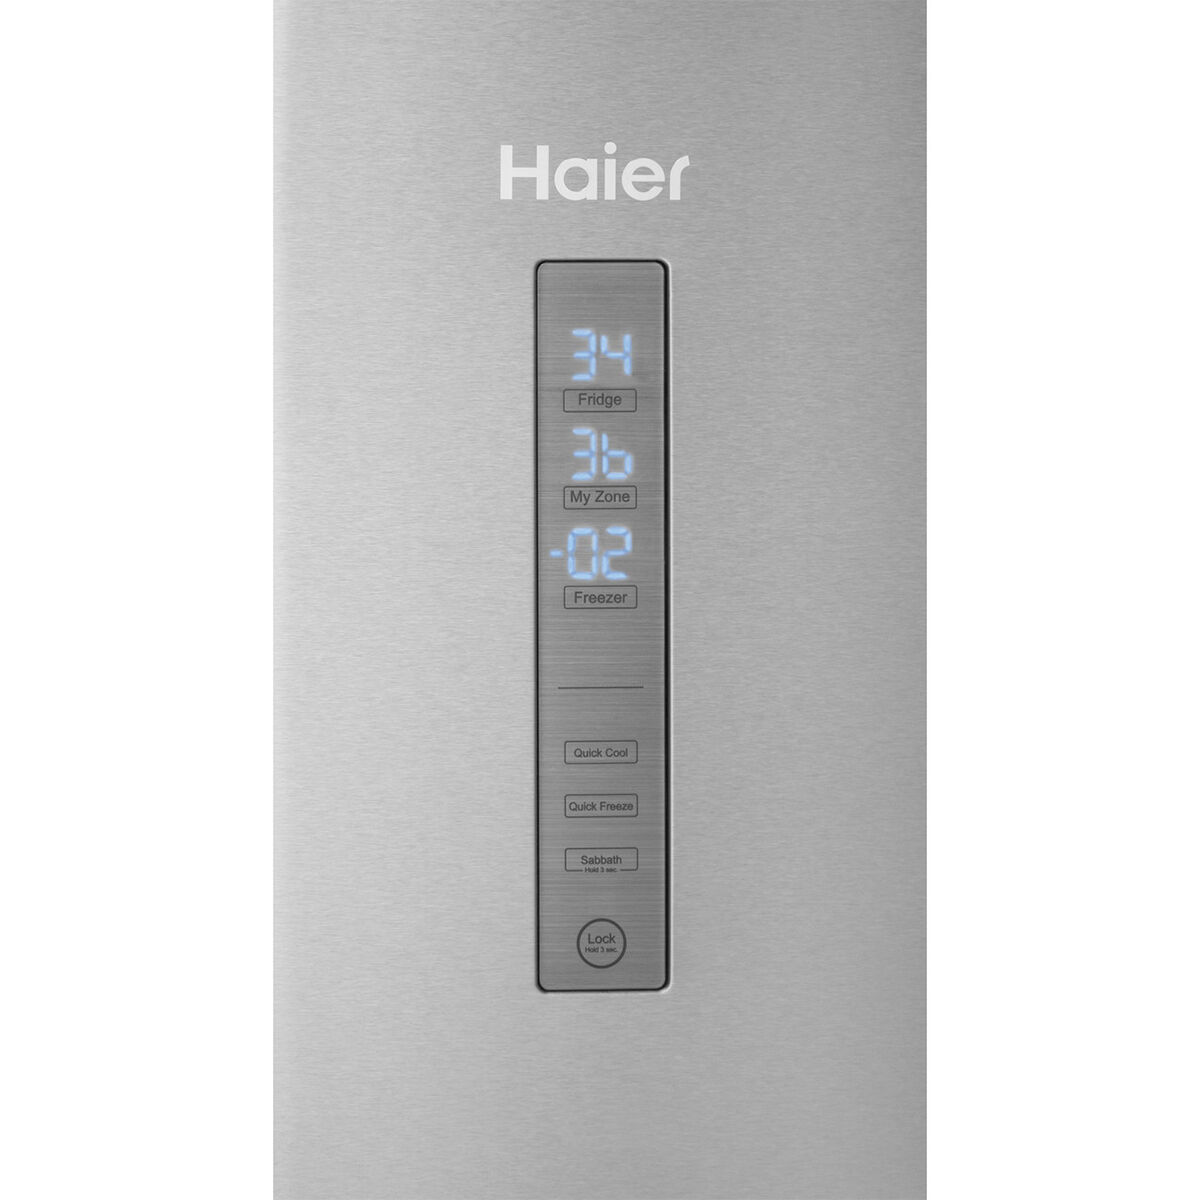 Haier 28 in. 15.0 cu. ft. Counter Depth Bottom Freezer Refrigerator -  Stainless Steel